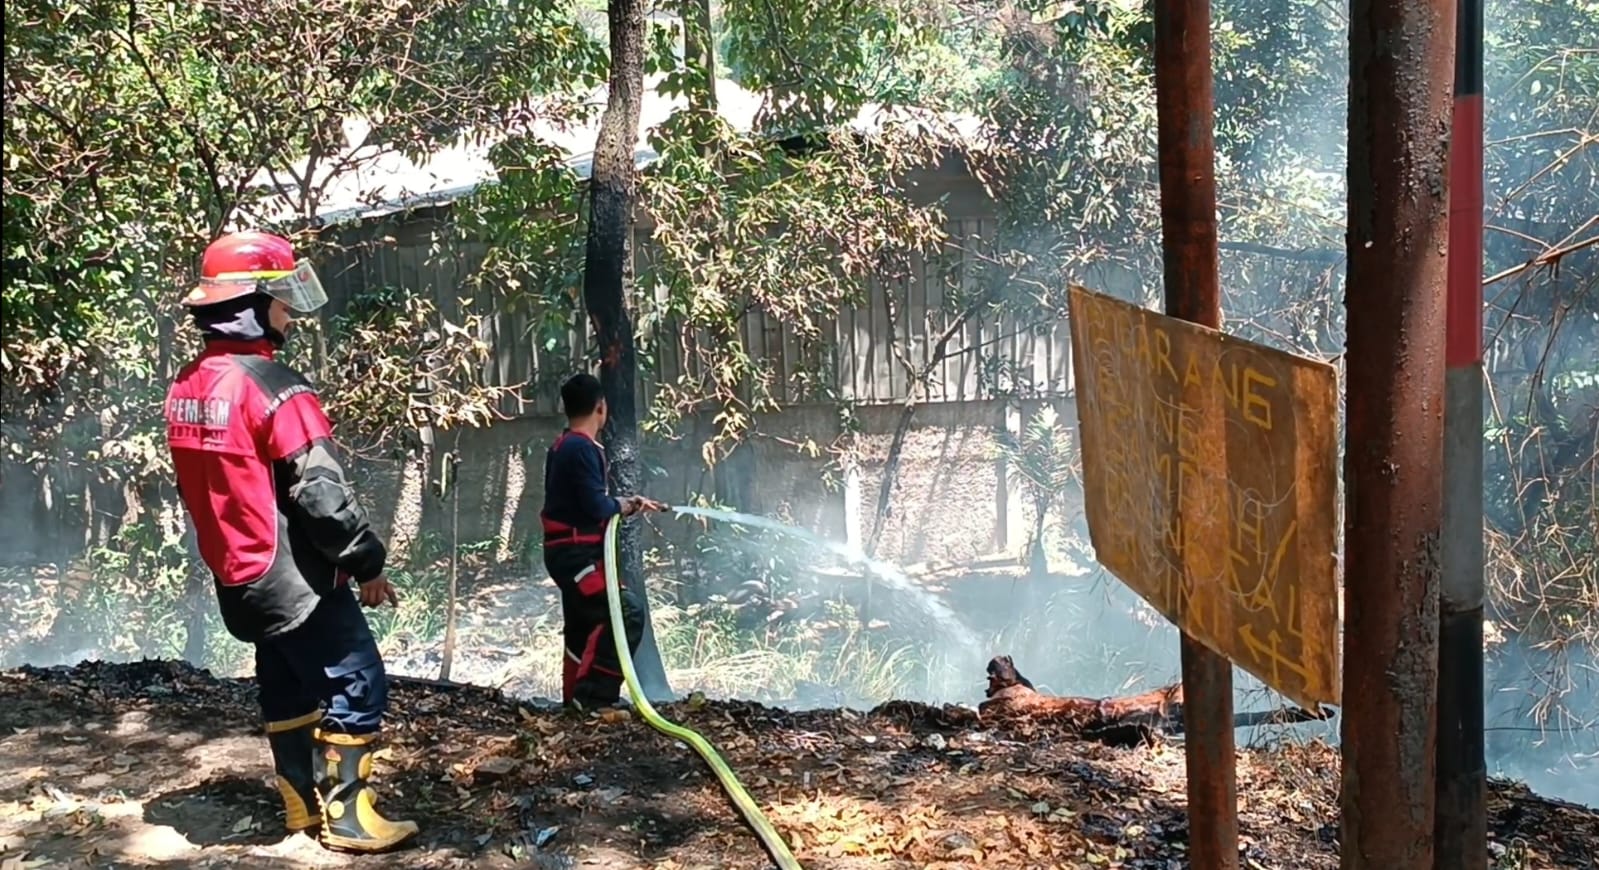 Petugas Damkar saat memadamkan kebakaran di ruang terbuka hijau di Baros Kota Cimahi. Kebakaran lahan terjadi akibat kekeringan dan pembakar sampah sembarangan./ Cecep Herdi